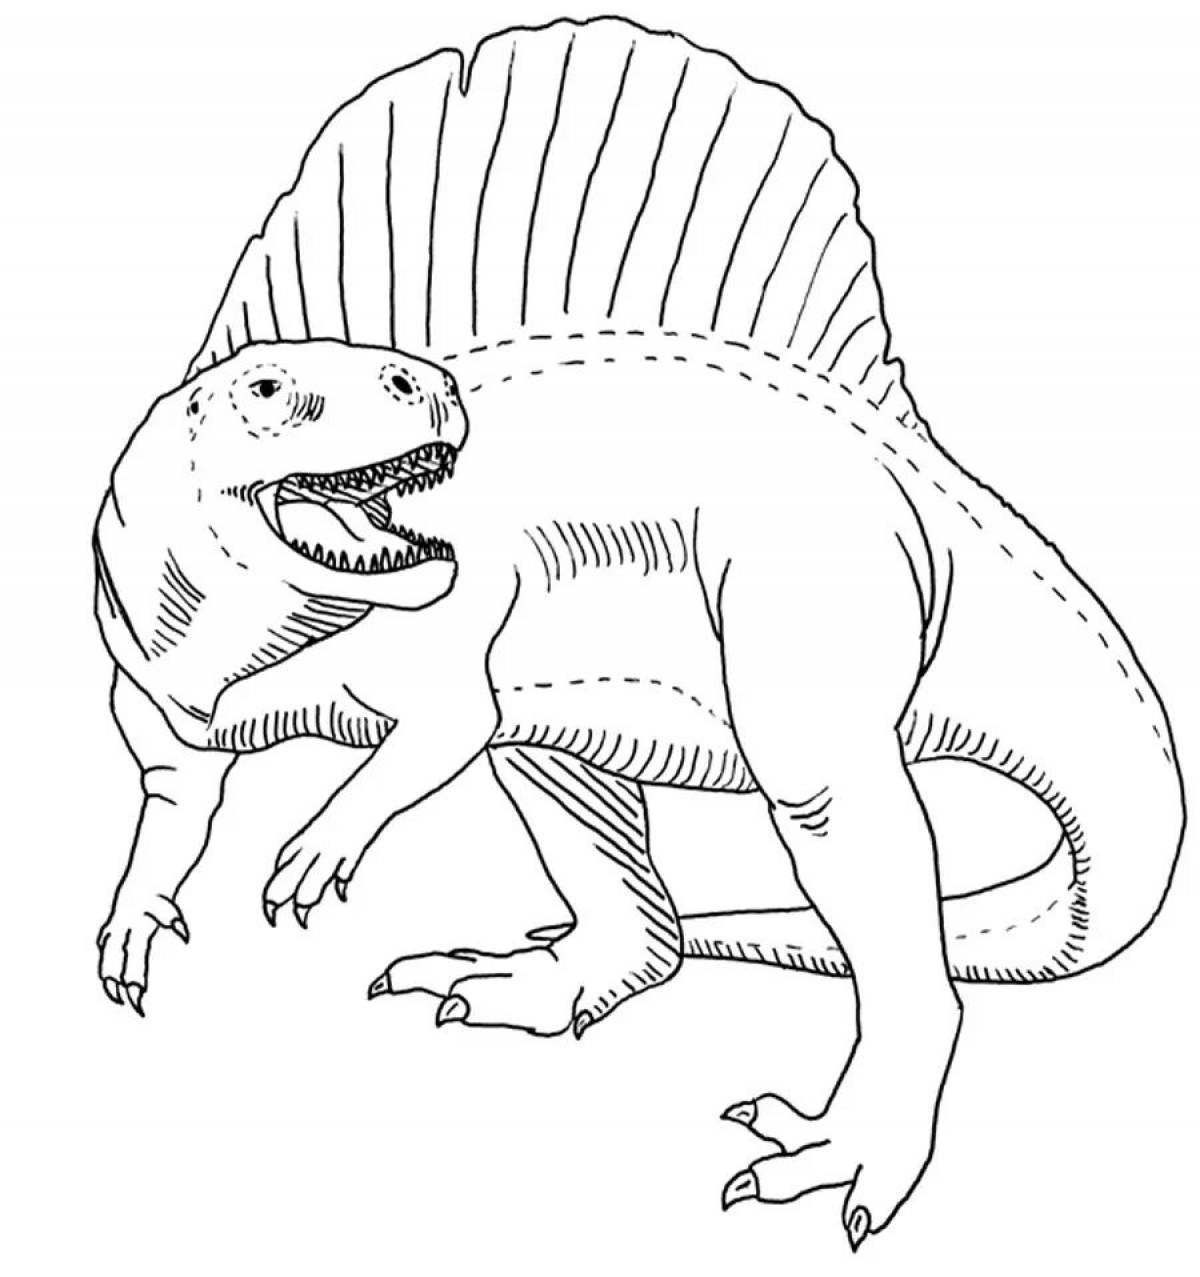 Dinosaur drawings for #6